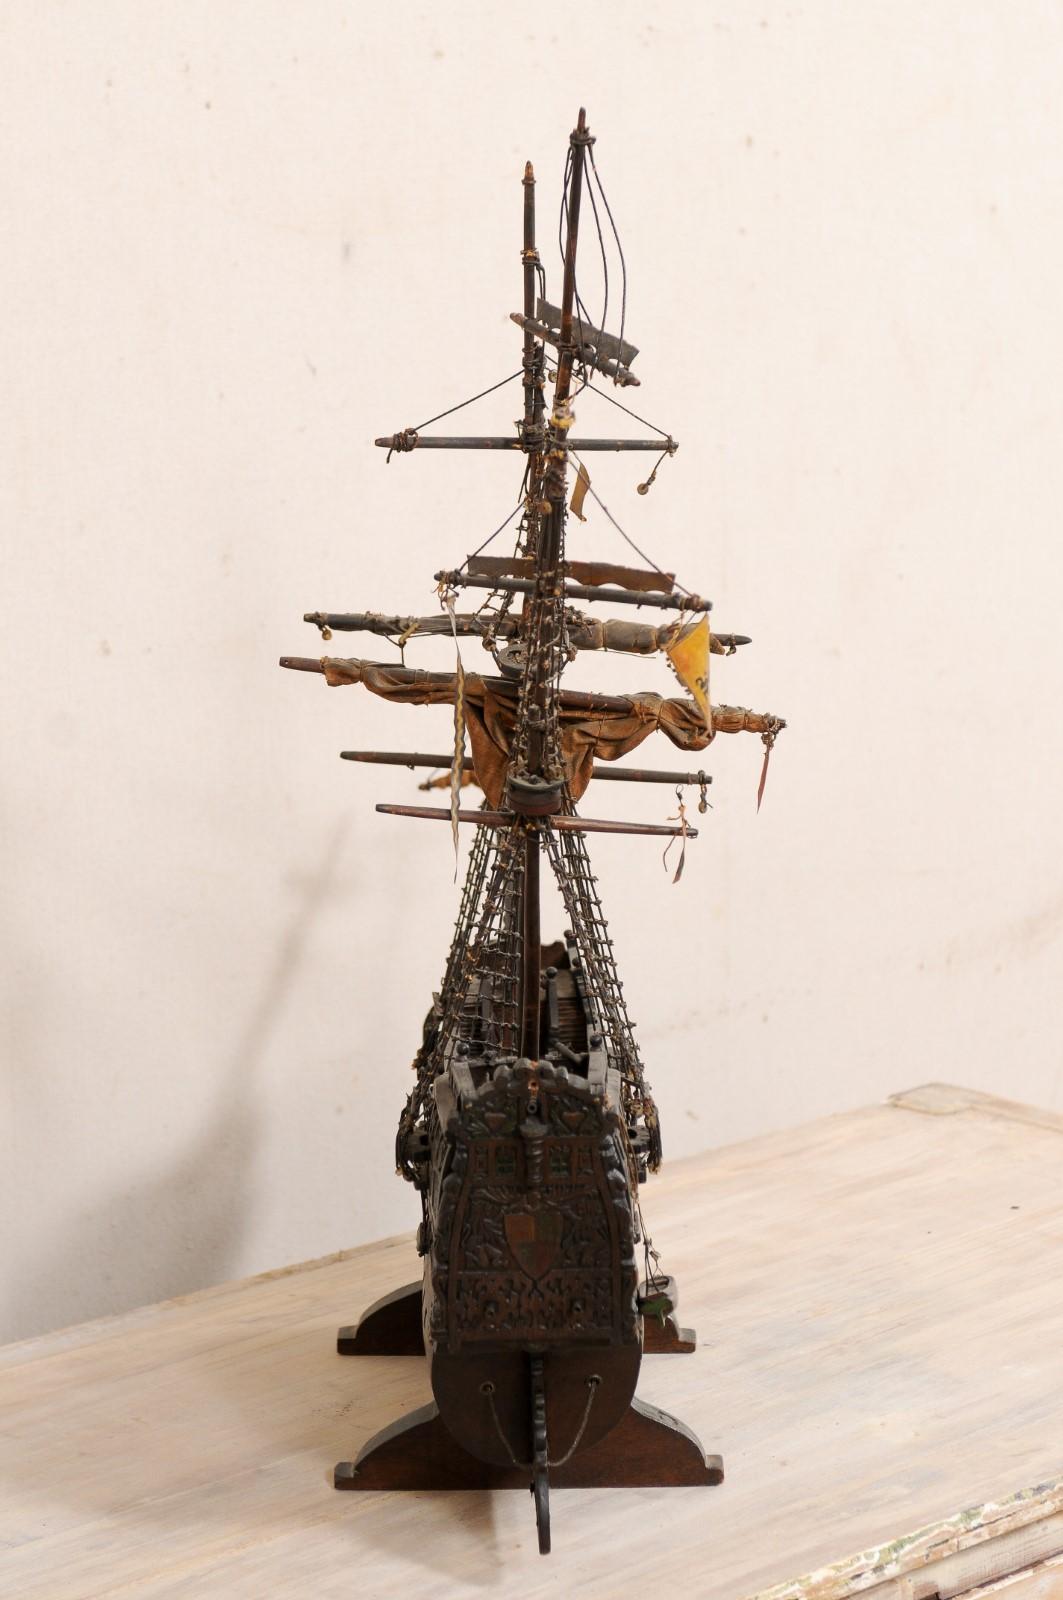 Italian Wooden Ship Model of a 15th/16th C. Galleon, Tall Ship, 3-Masat Schooner For Sale 4